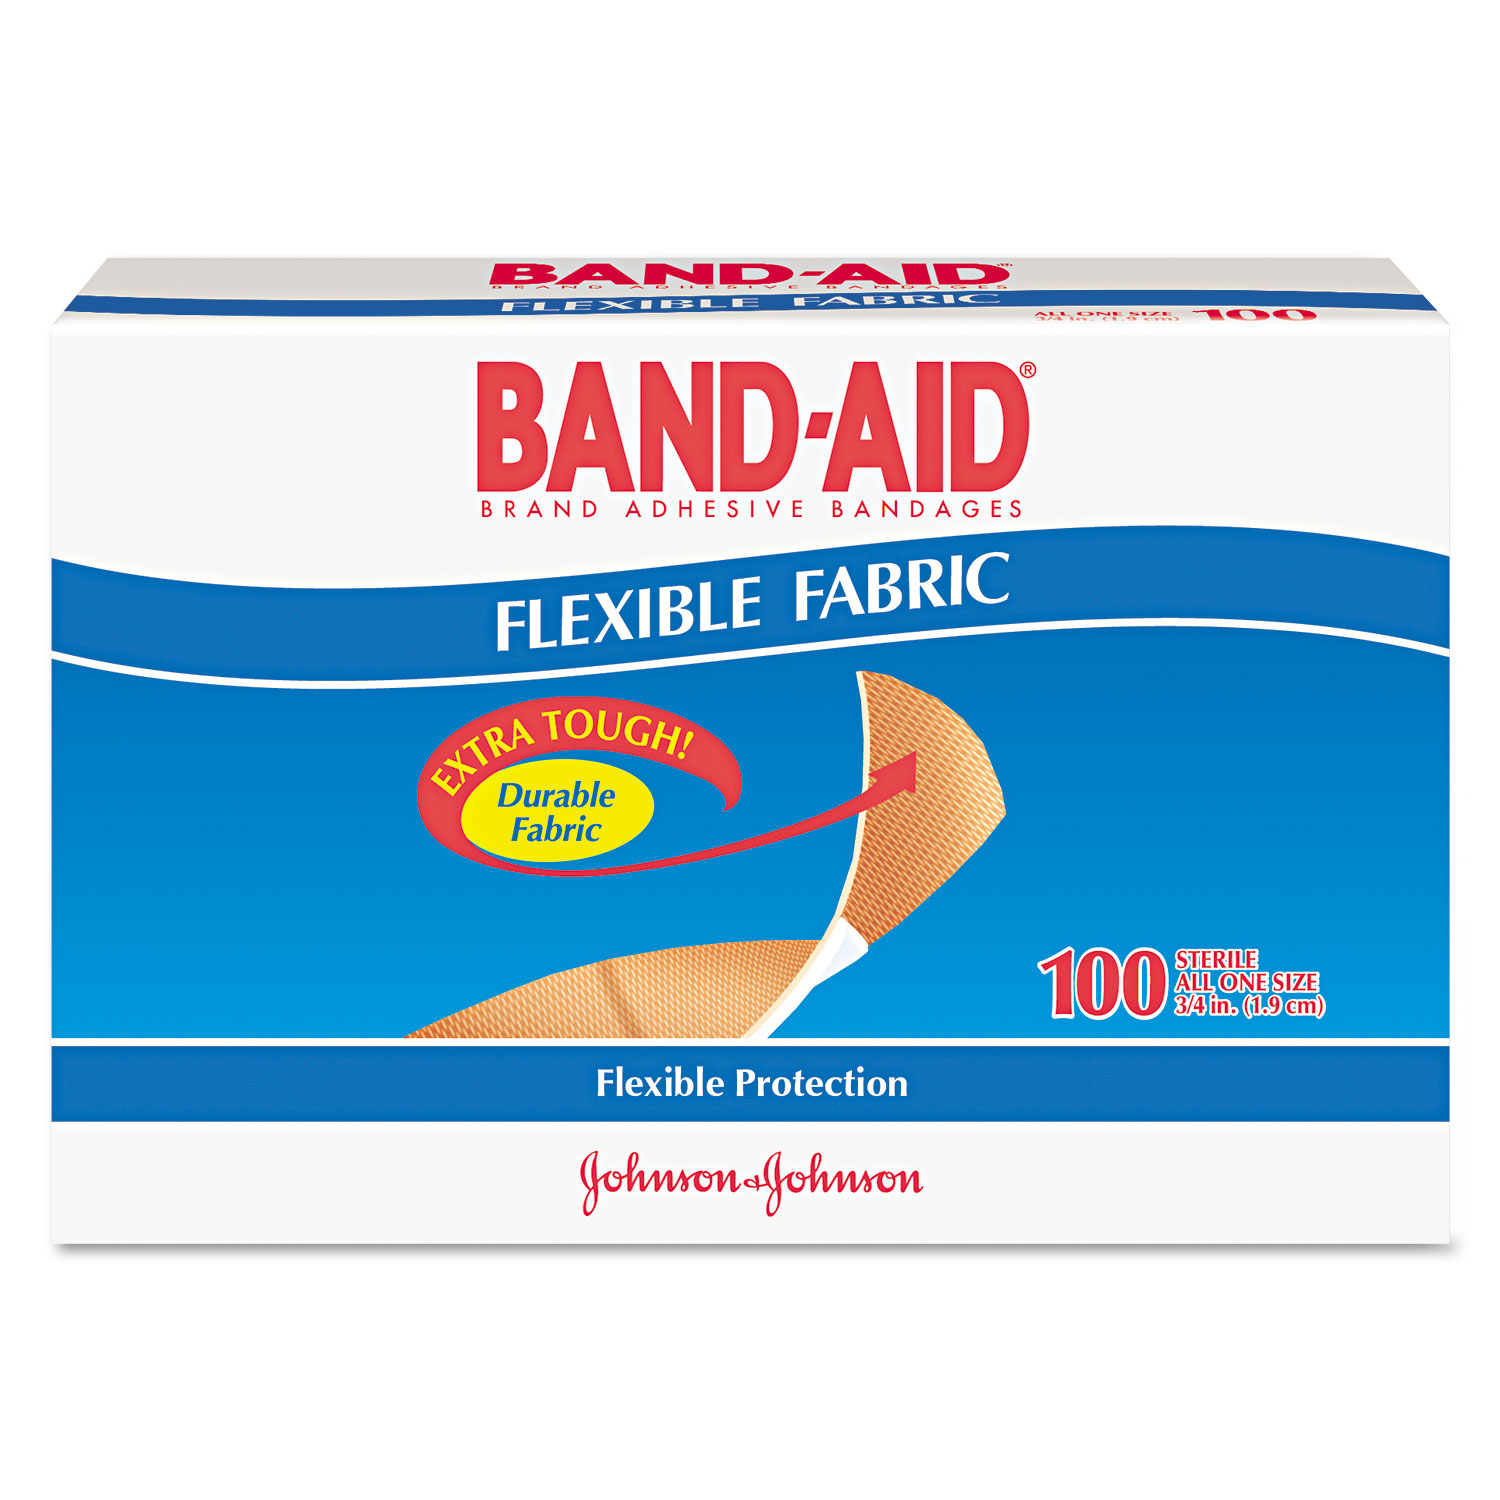  BAND-AID 4434 Flexible Fabric Premium Adhesive Bandages, 3/4 x 3, 100/Box (JOJ4434) 